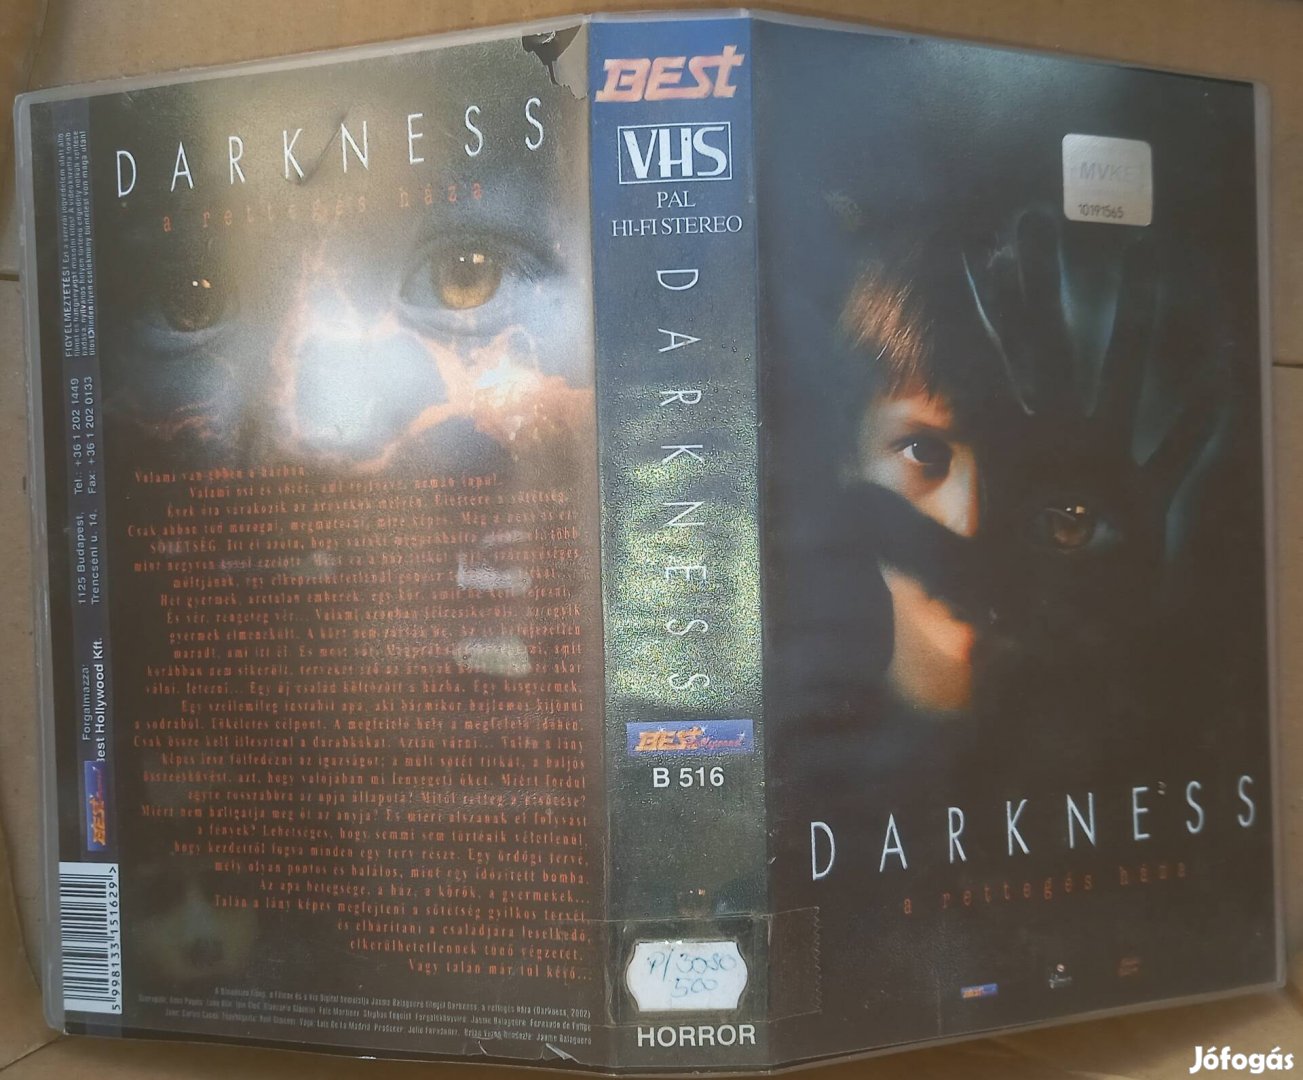 Darkness - A rettegés háza - horror vhs